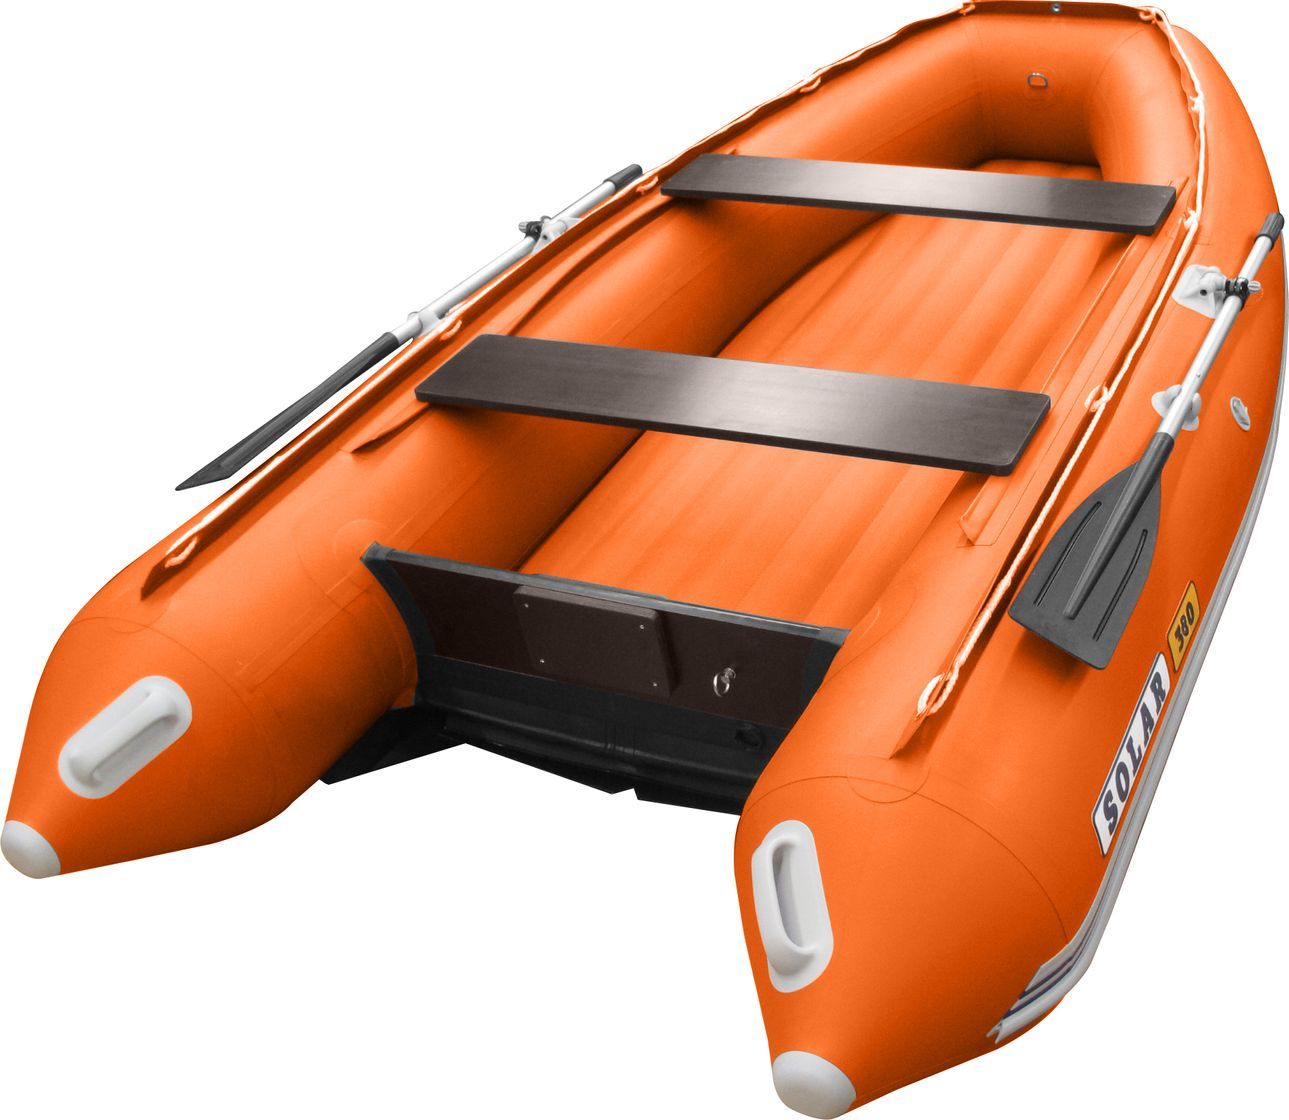 Надувная лодка ПВХ SOLAR-350 К (Максима), оранжевый SLR350k_max_orange надувная лодка пвх riverboats rb 410 нднд черно оранжевый rb410ndbo